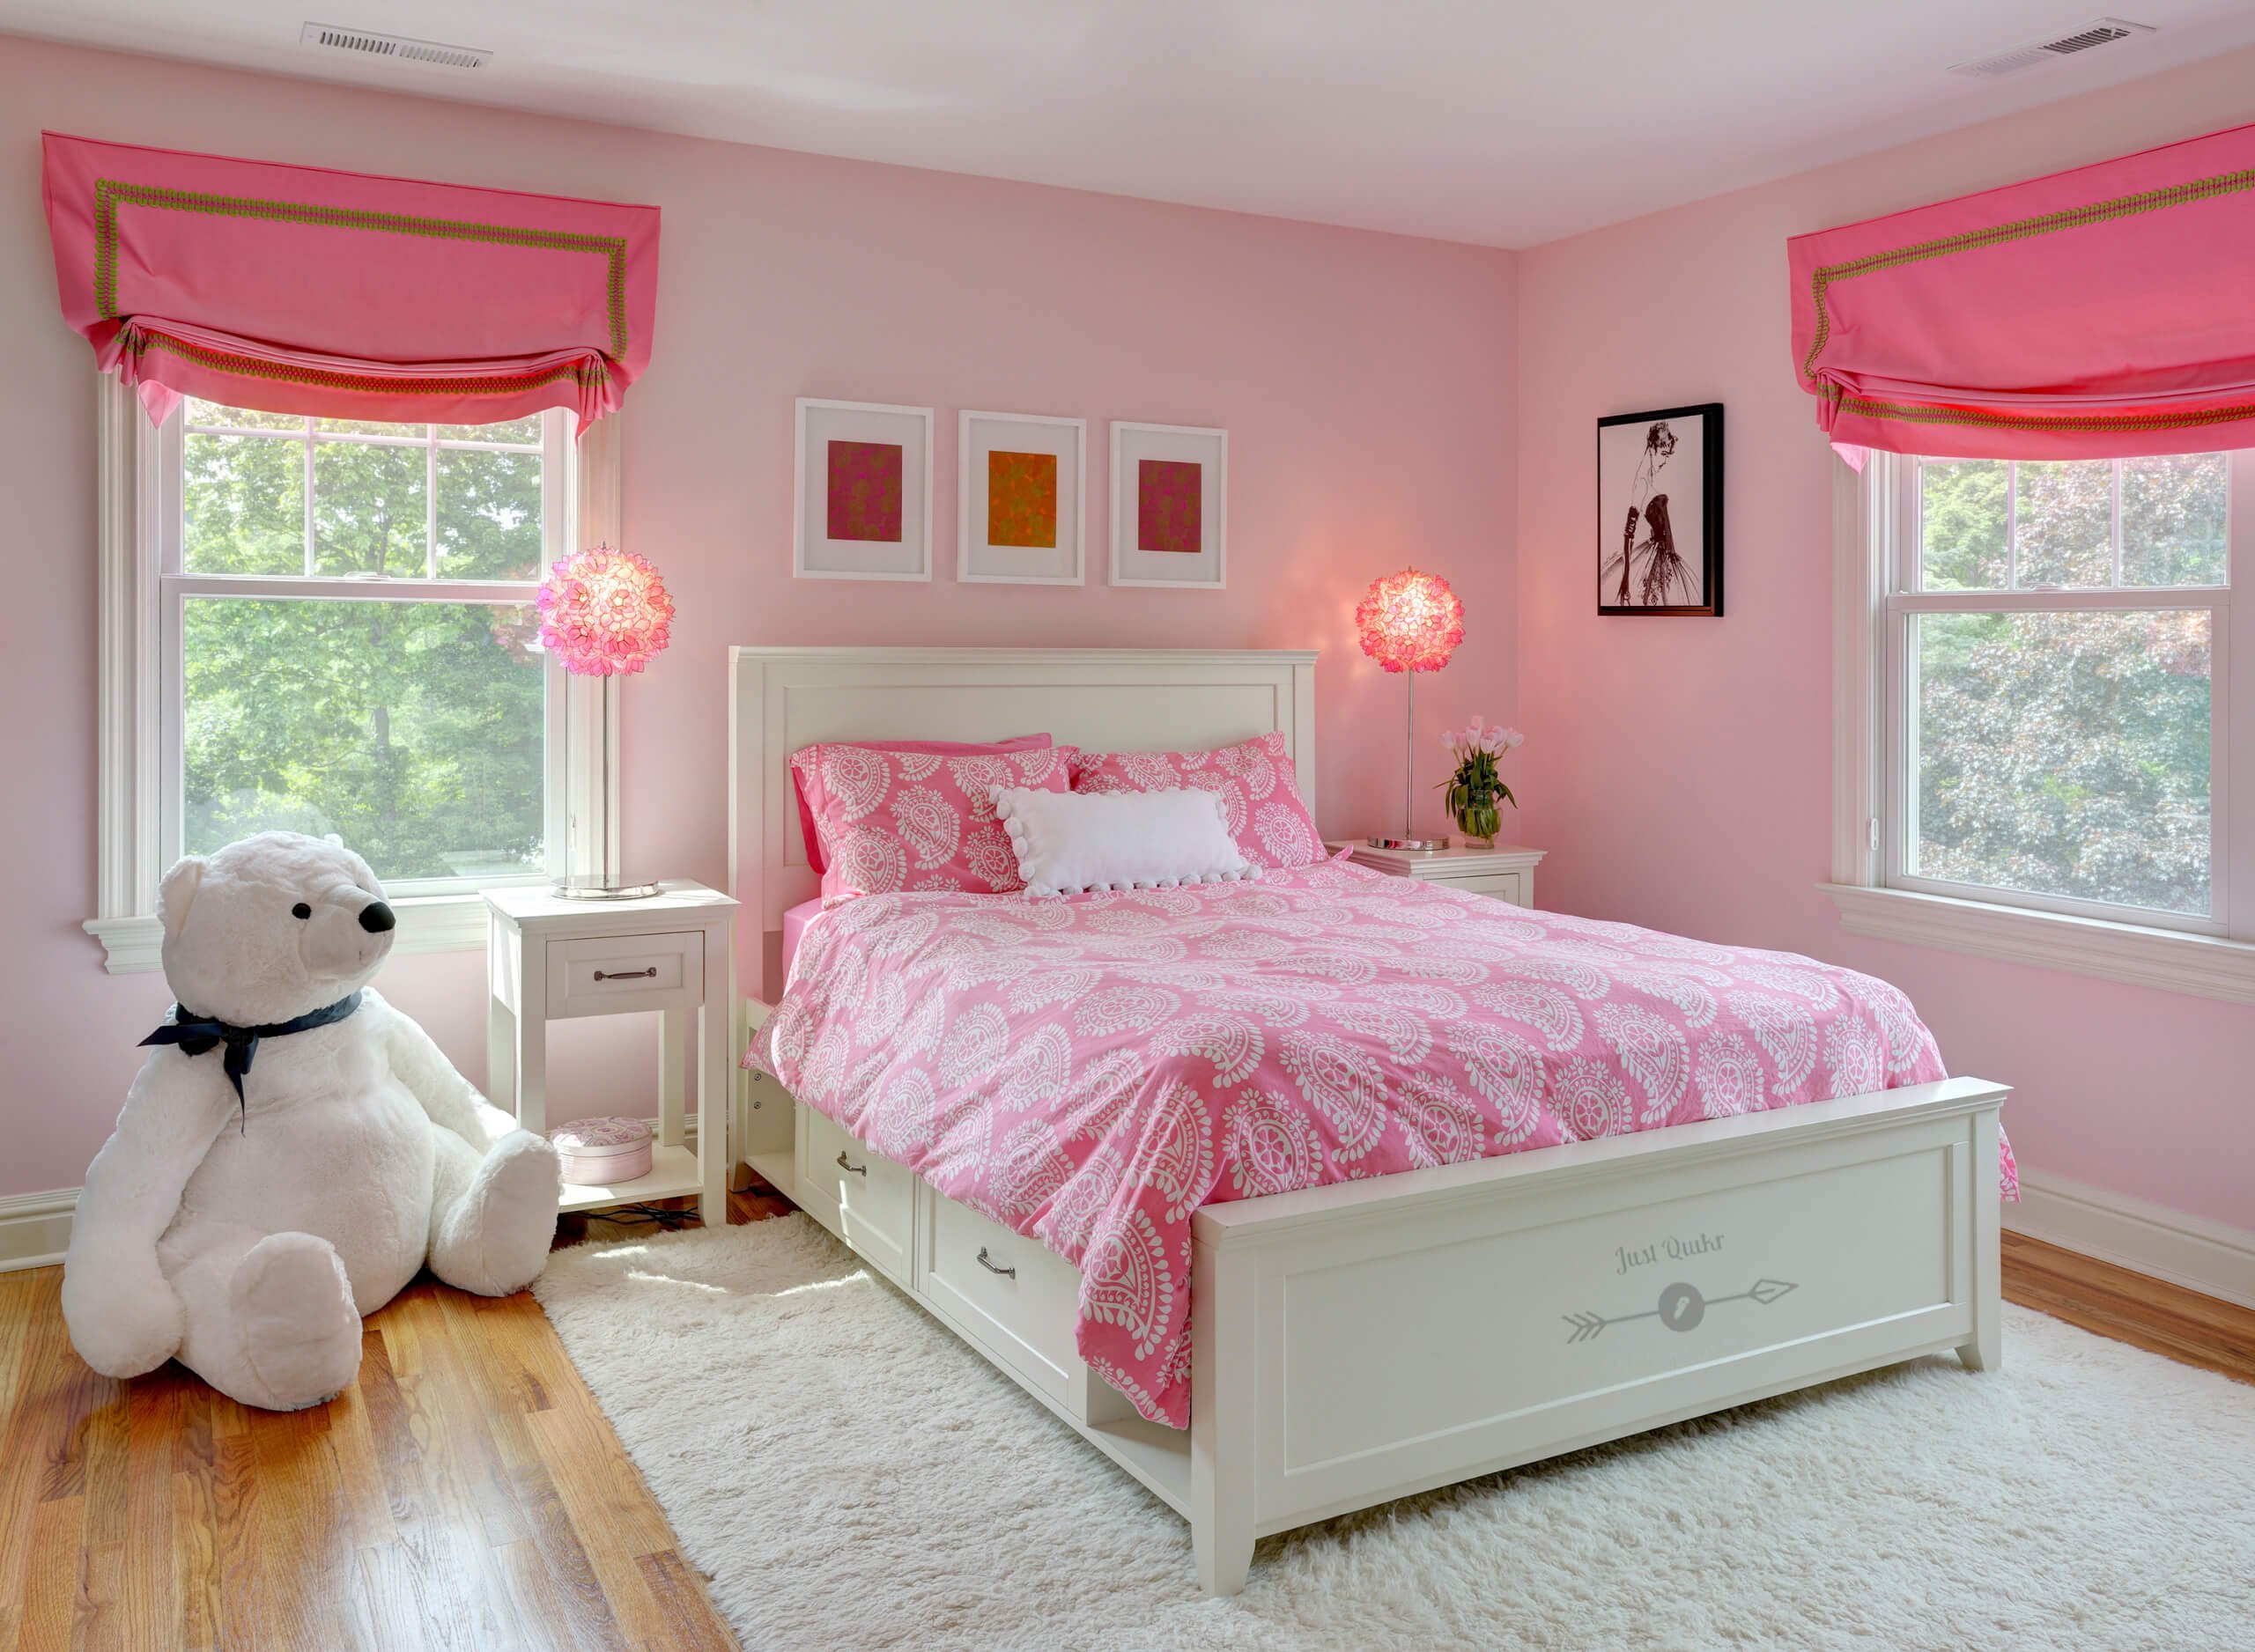 Комната в розовых тонах. Комната для девочки. Розовая спальня для девочки. Спальня для девочки в розовых тонах. Розовая комната для девочки.